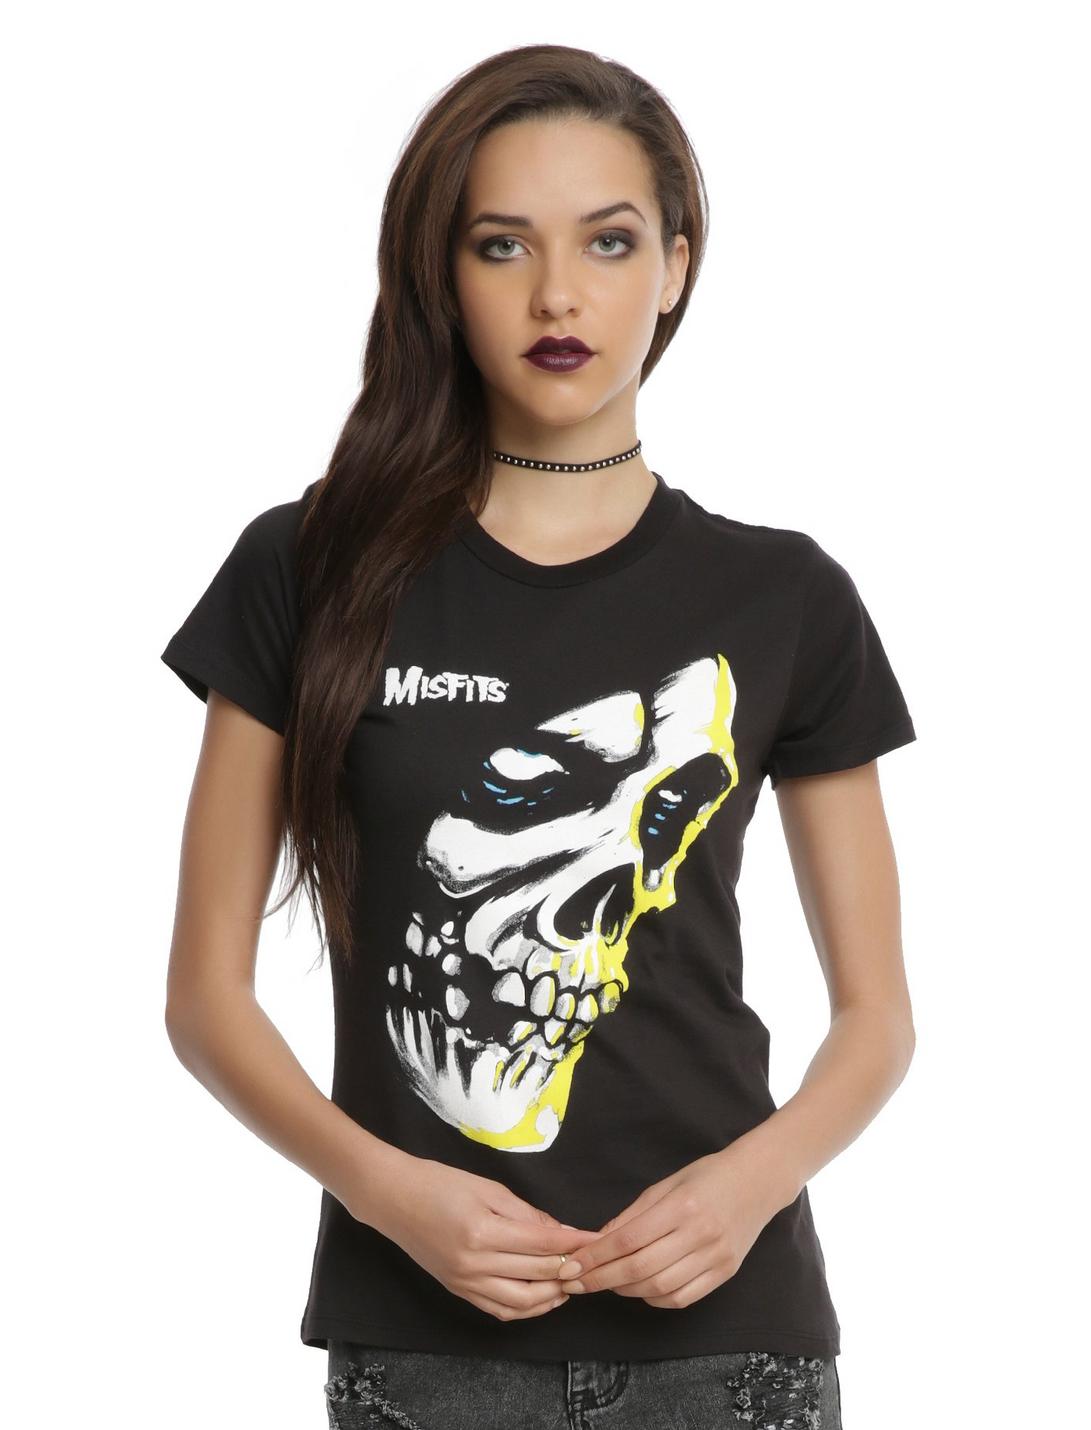 Misfits Fiend Face Girls T-Shirt, BLACK, hi-res